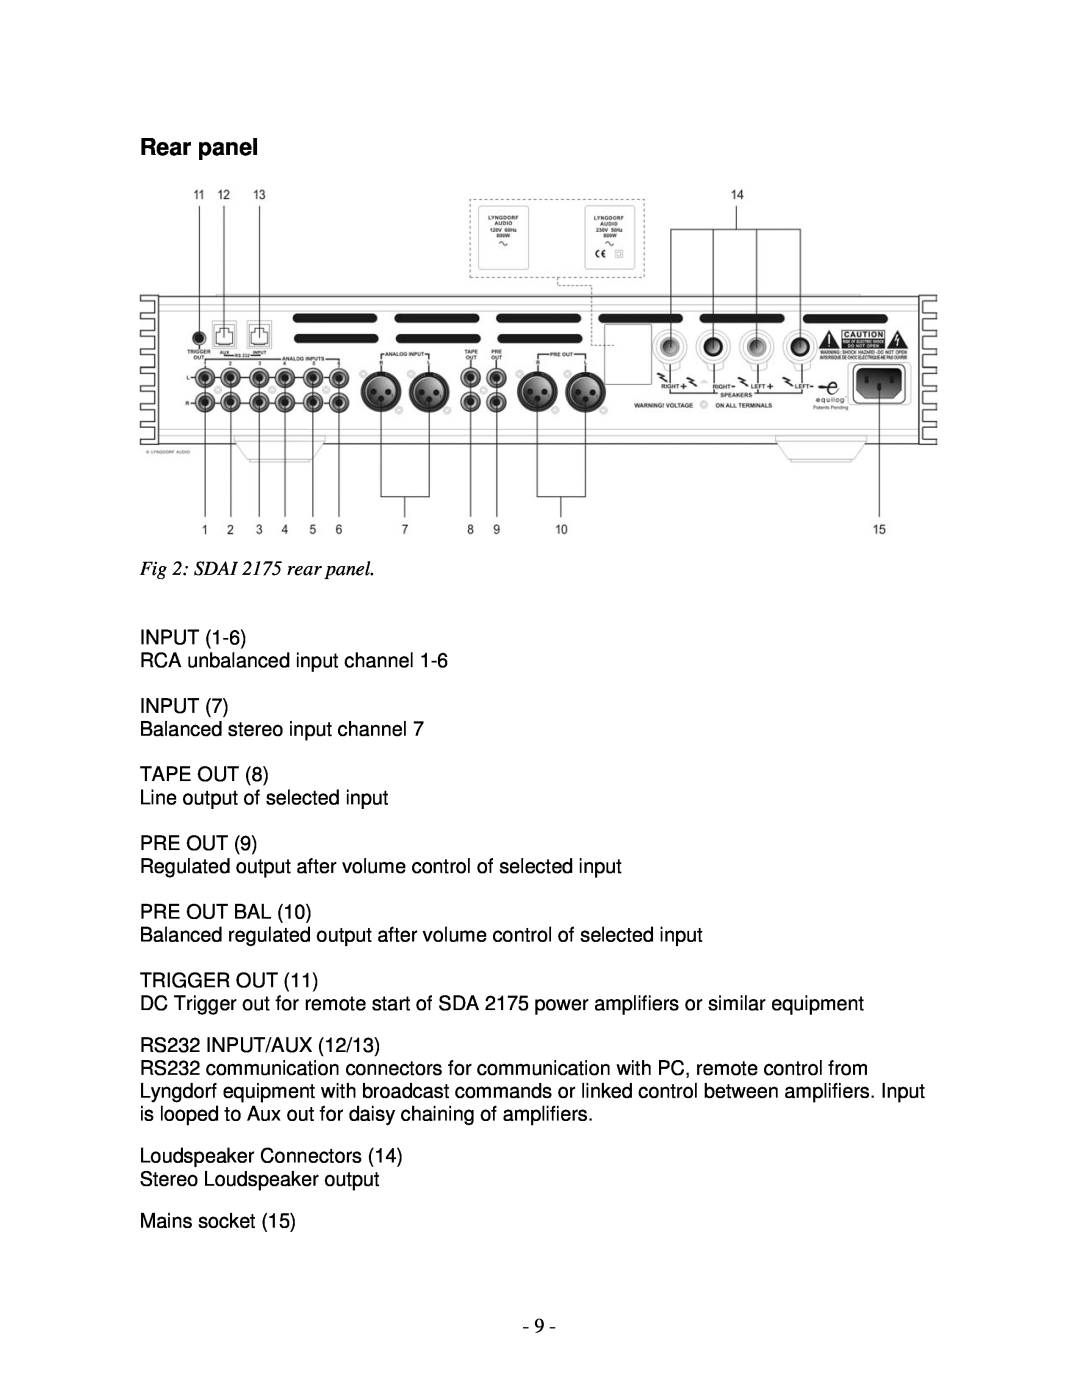 Lyngdorf Audio owner manual Rear panel, SDAI 2175 rear panel 